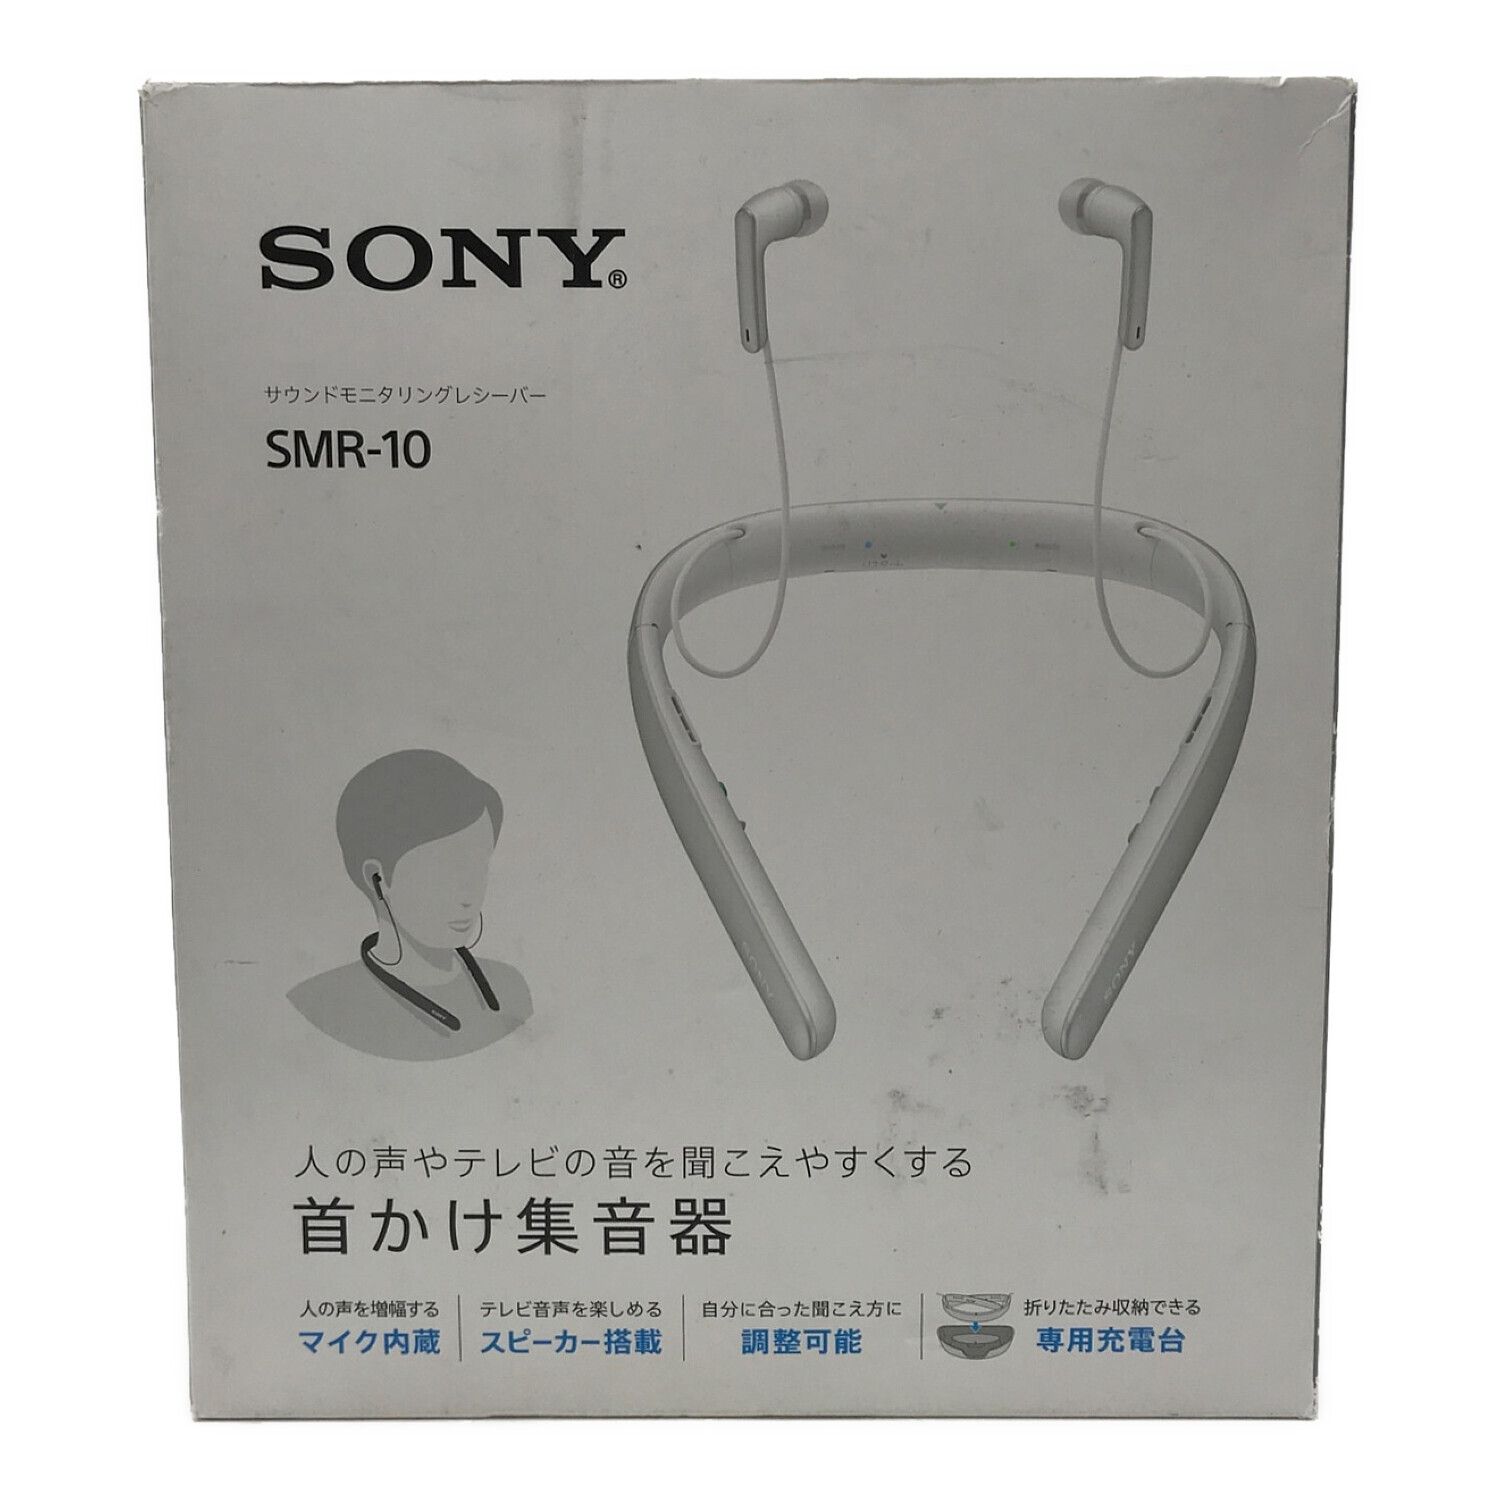 SONY (ソニー) サウンドモニタリングレシーバー SMR-10 -